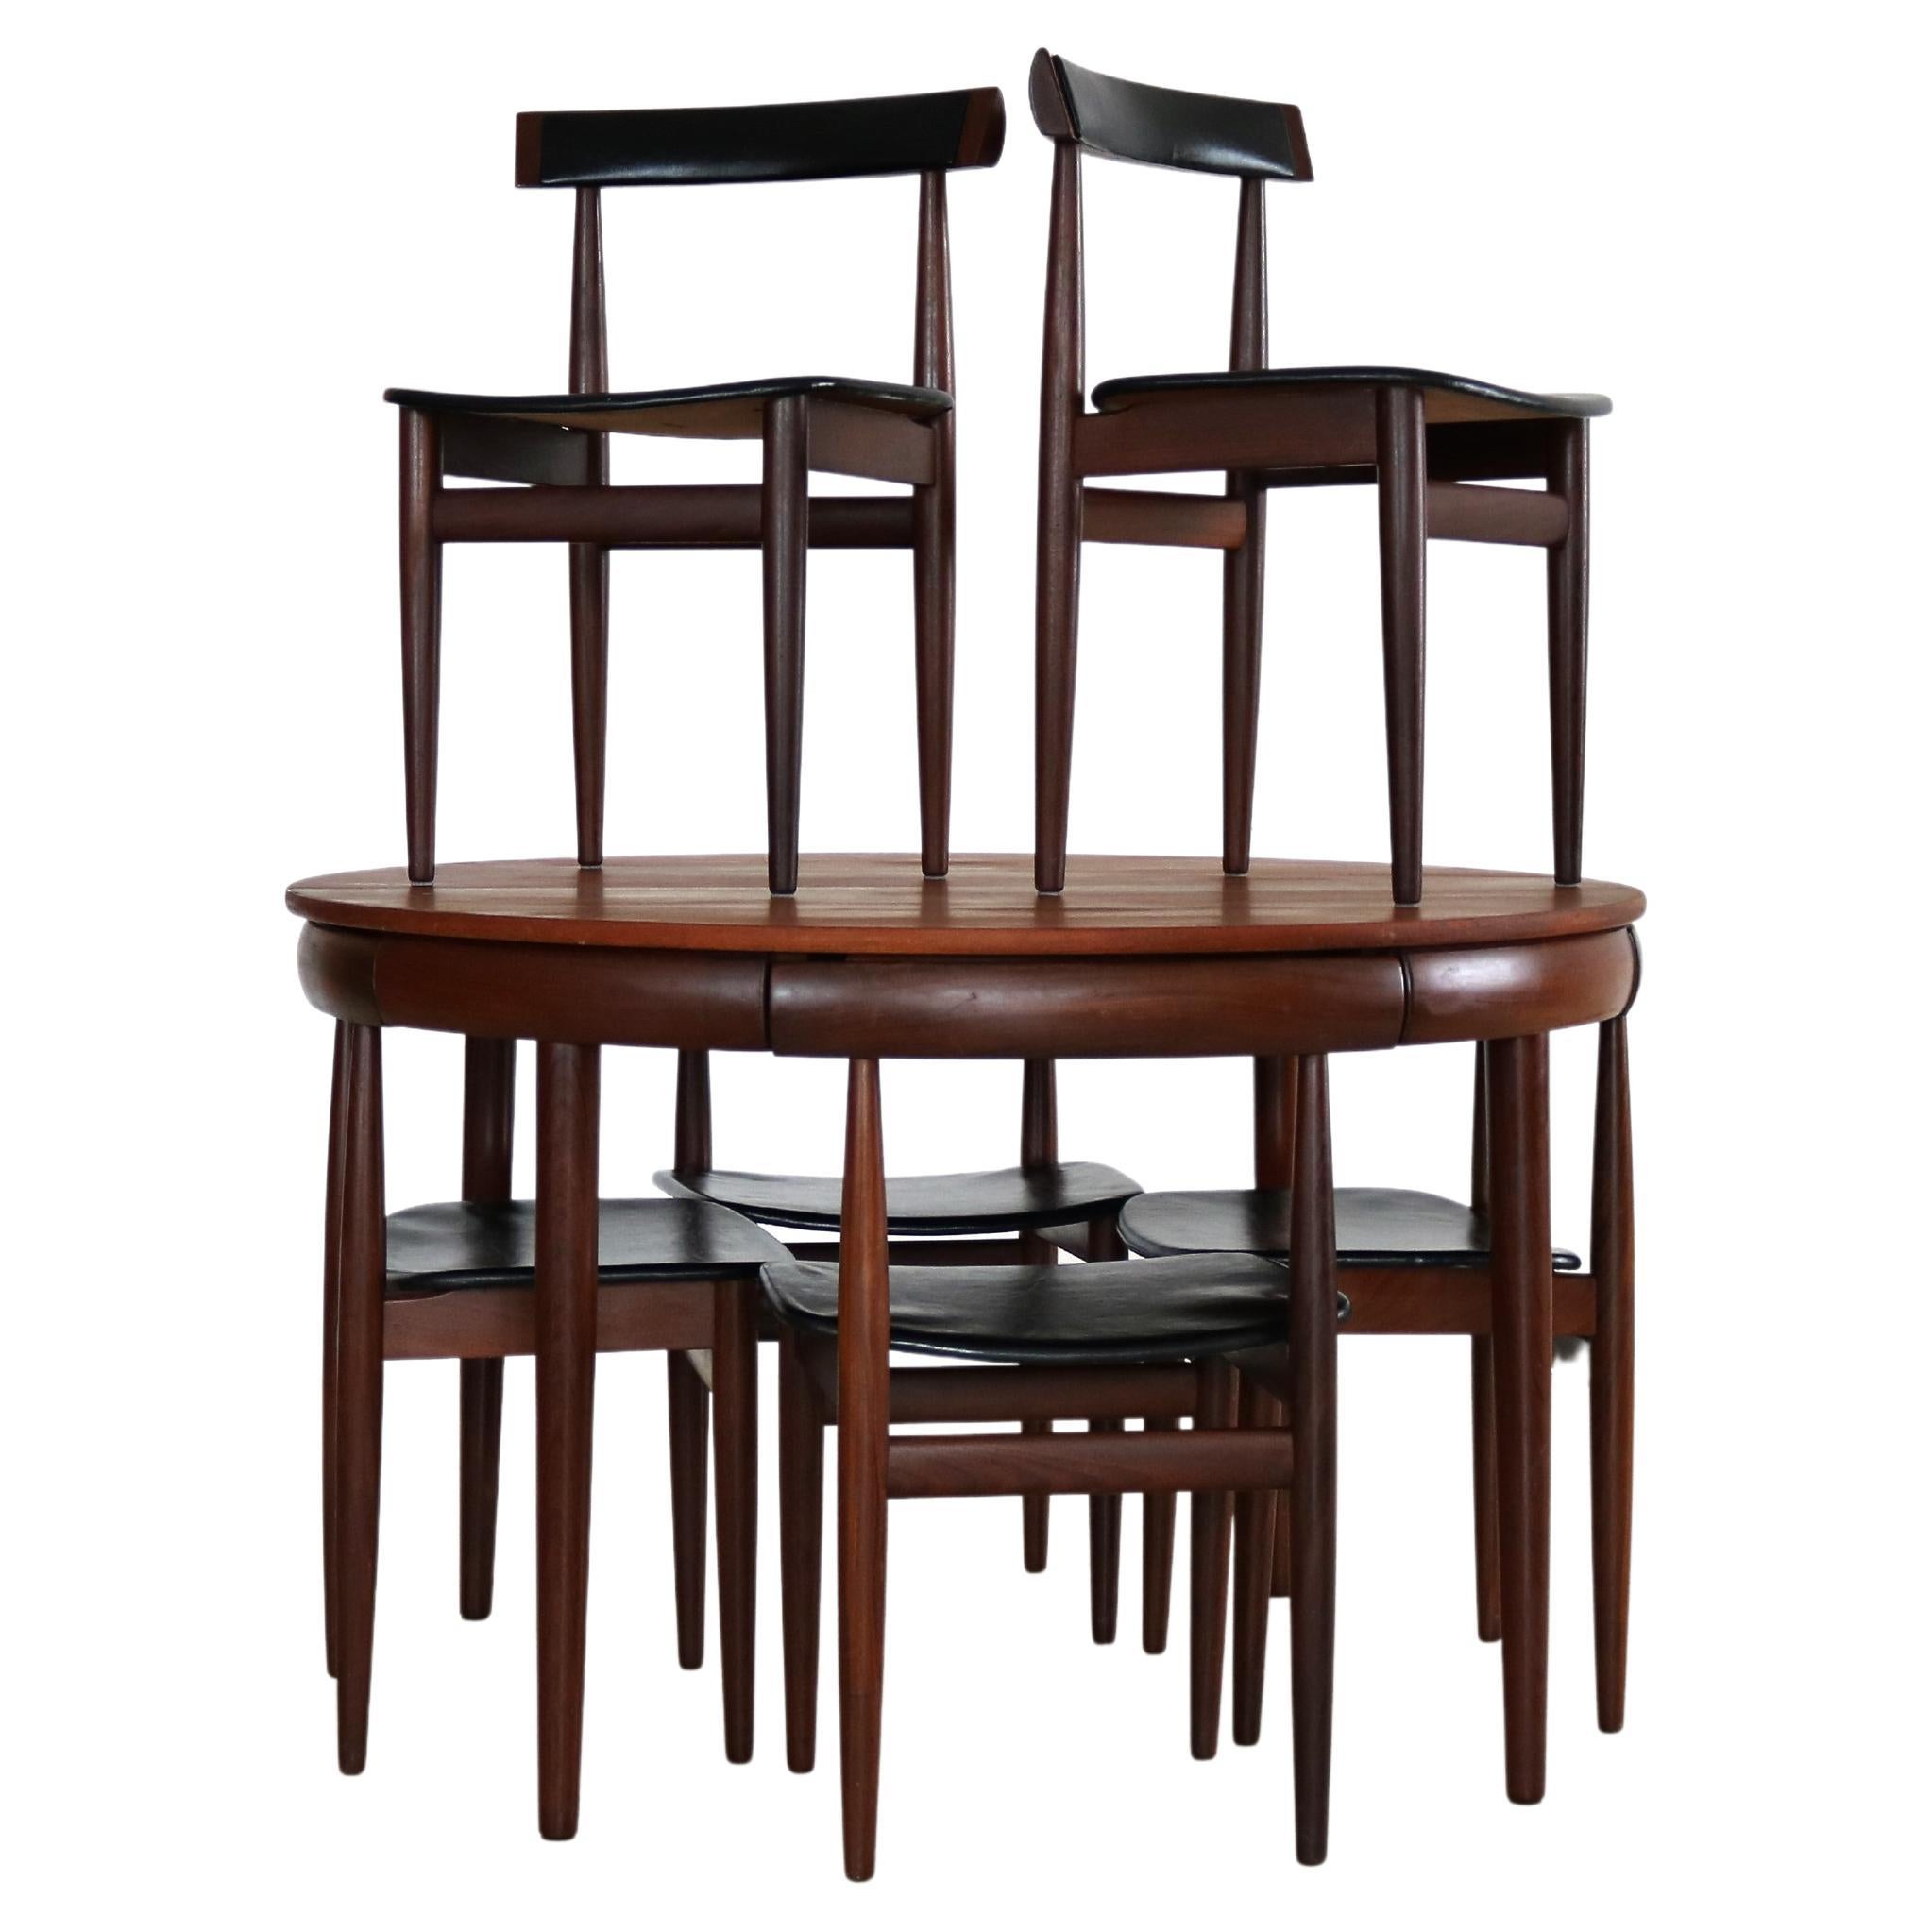 Vintage-Esszimmer-Set  Tabelle  Stühle  Fremde Rojle  Dänisches Design